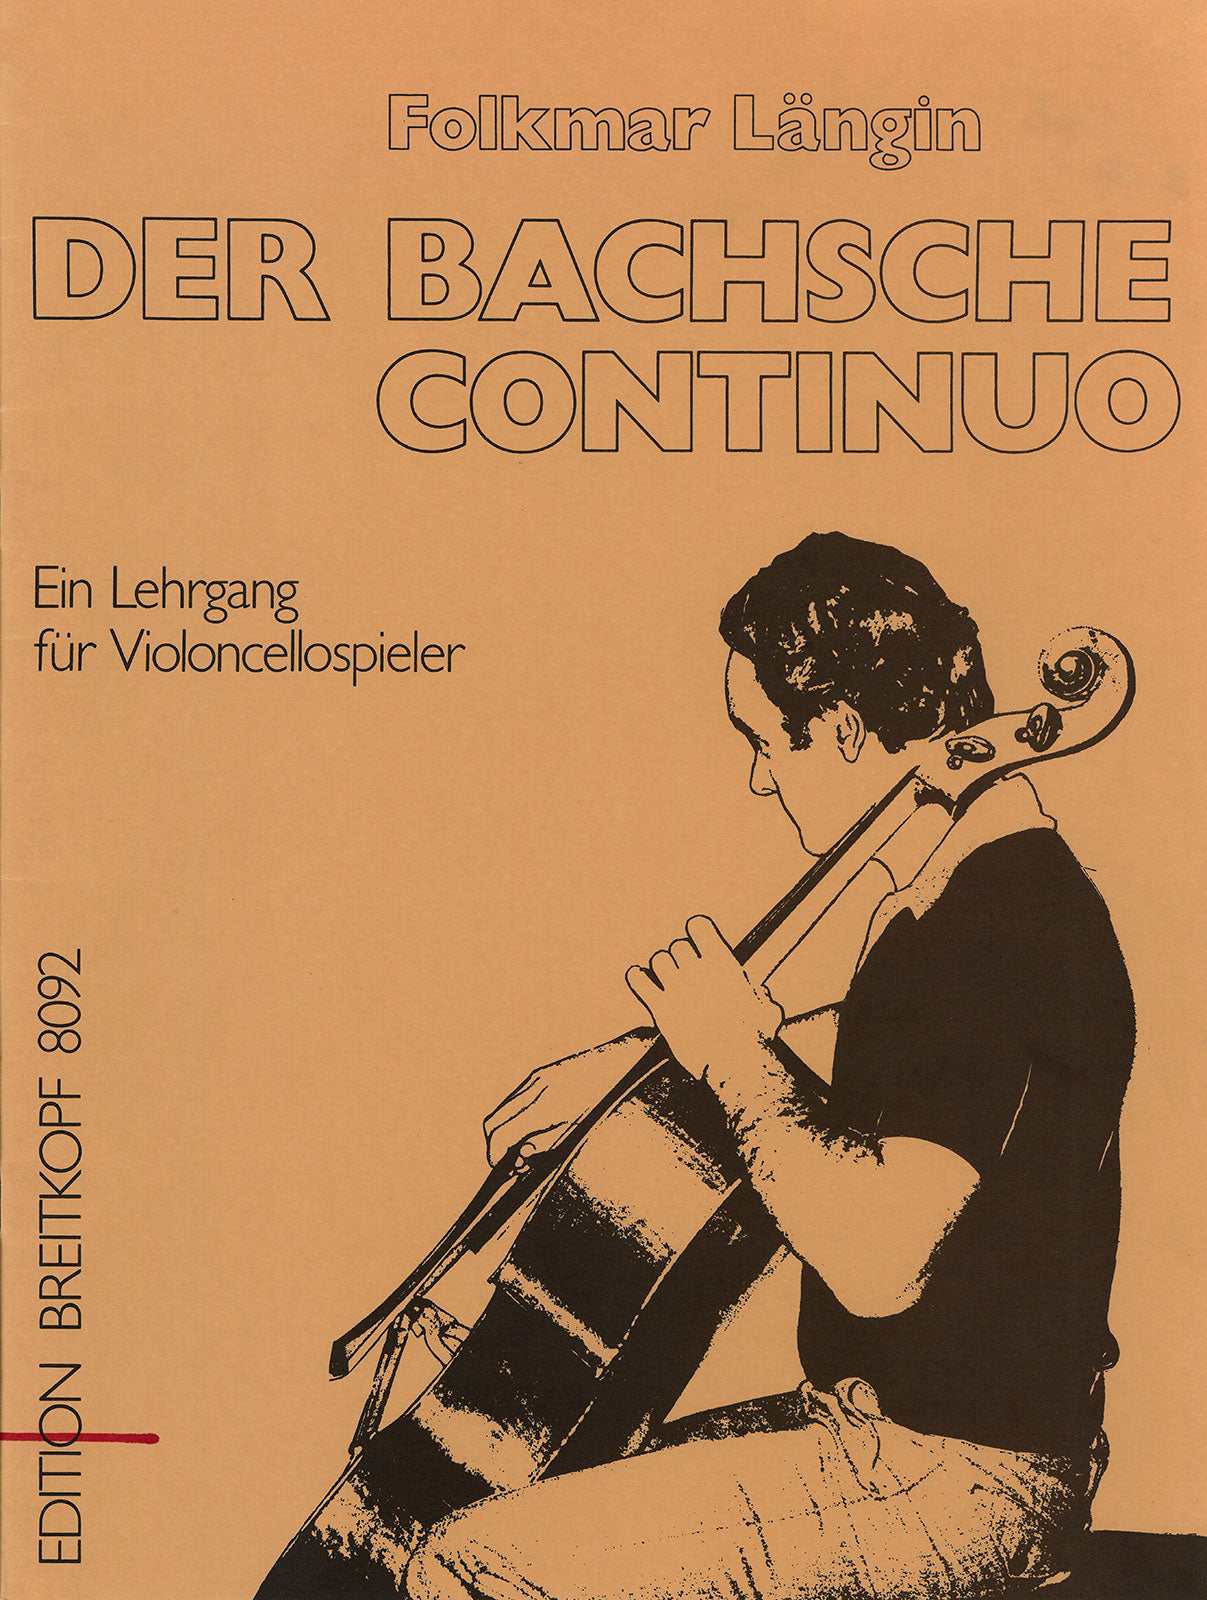 Längin: Der Bachsche Continuo (Bach's Continuo)